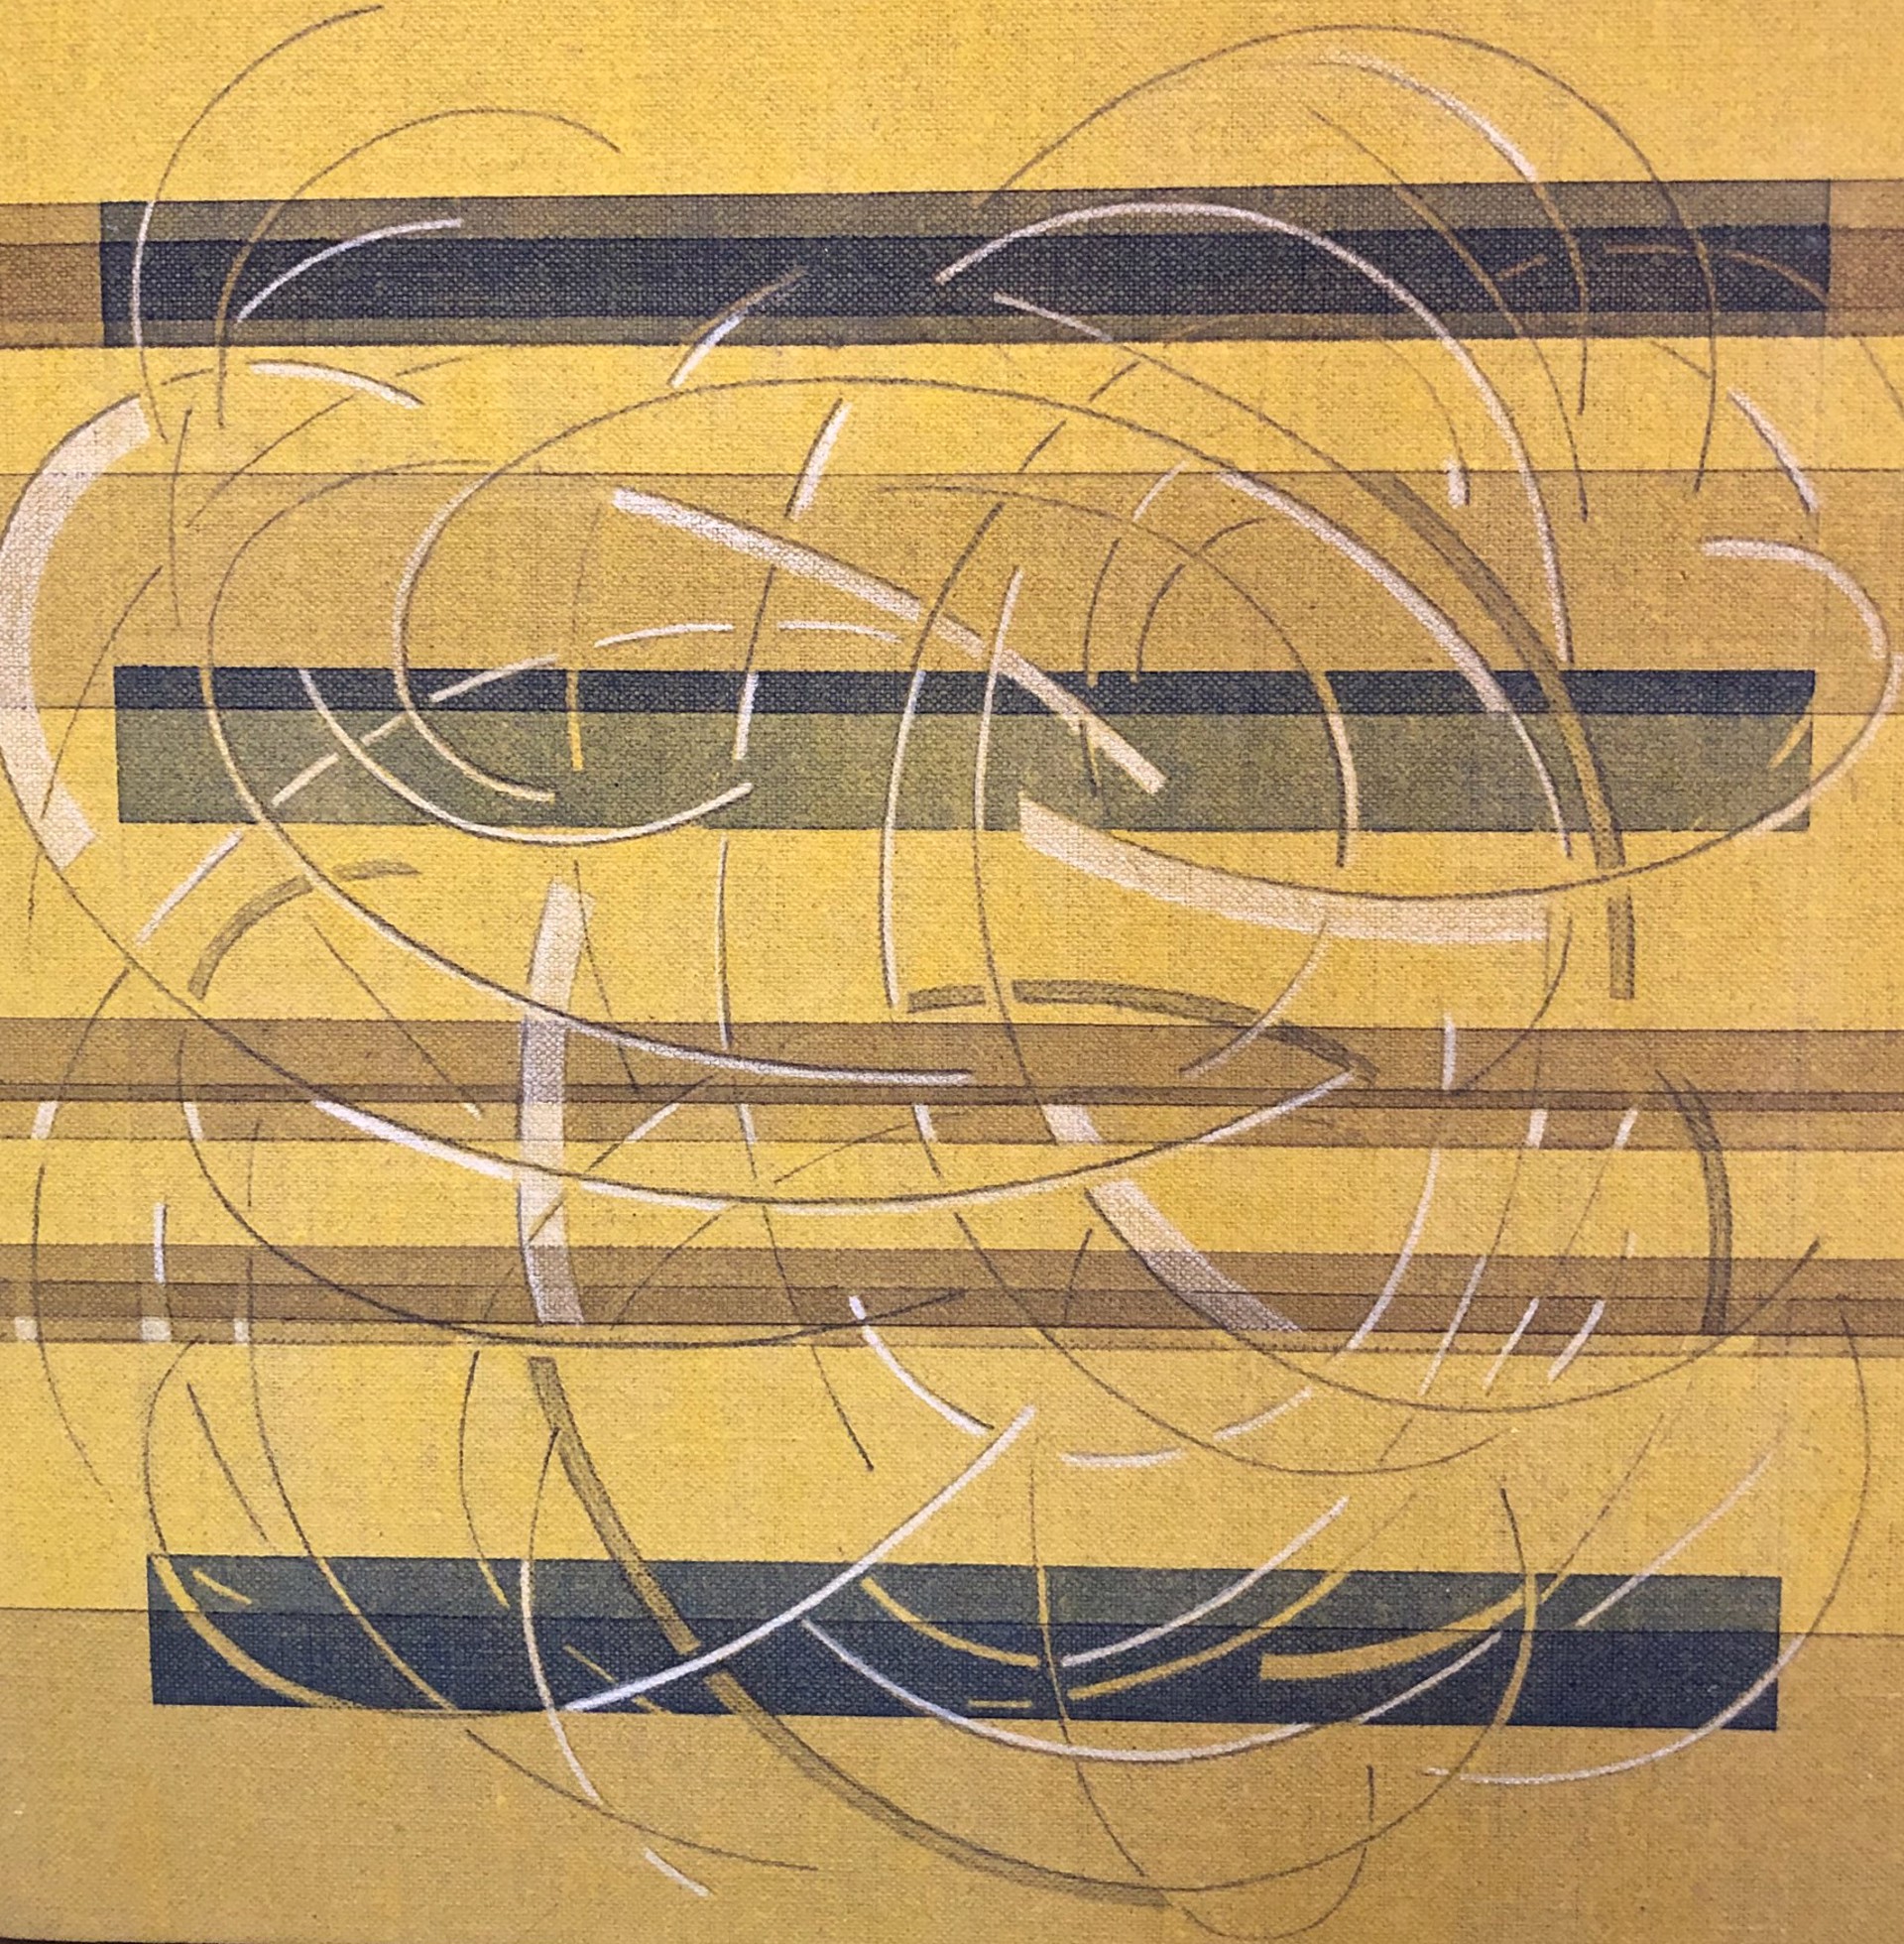 Every Other Line: Yellow Medium #2 by Jim Zingarelli